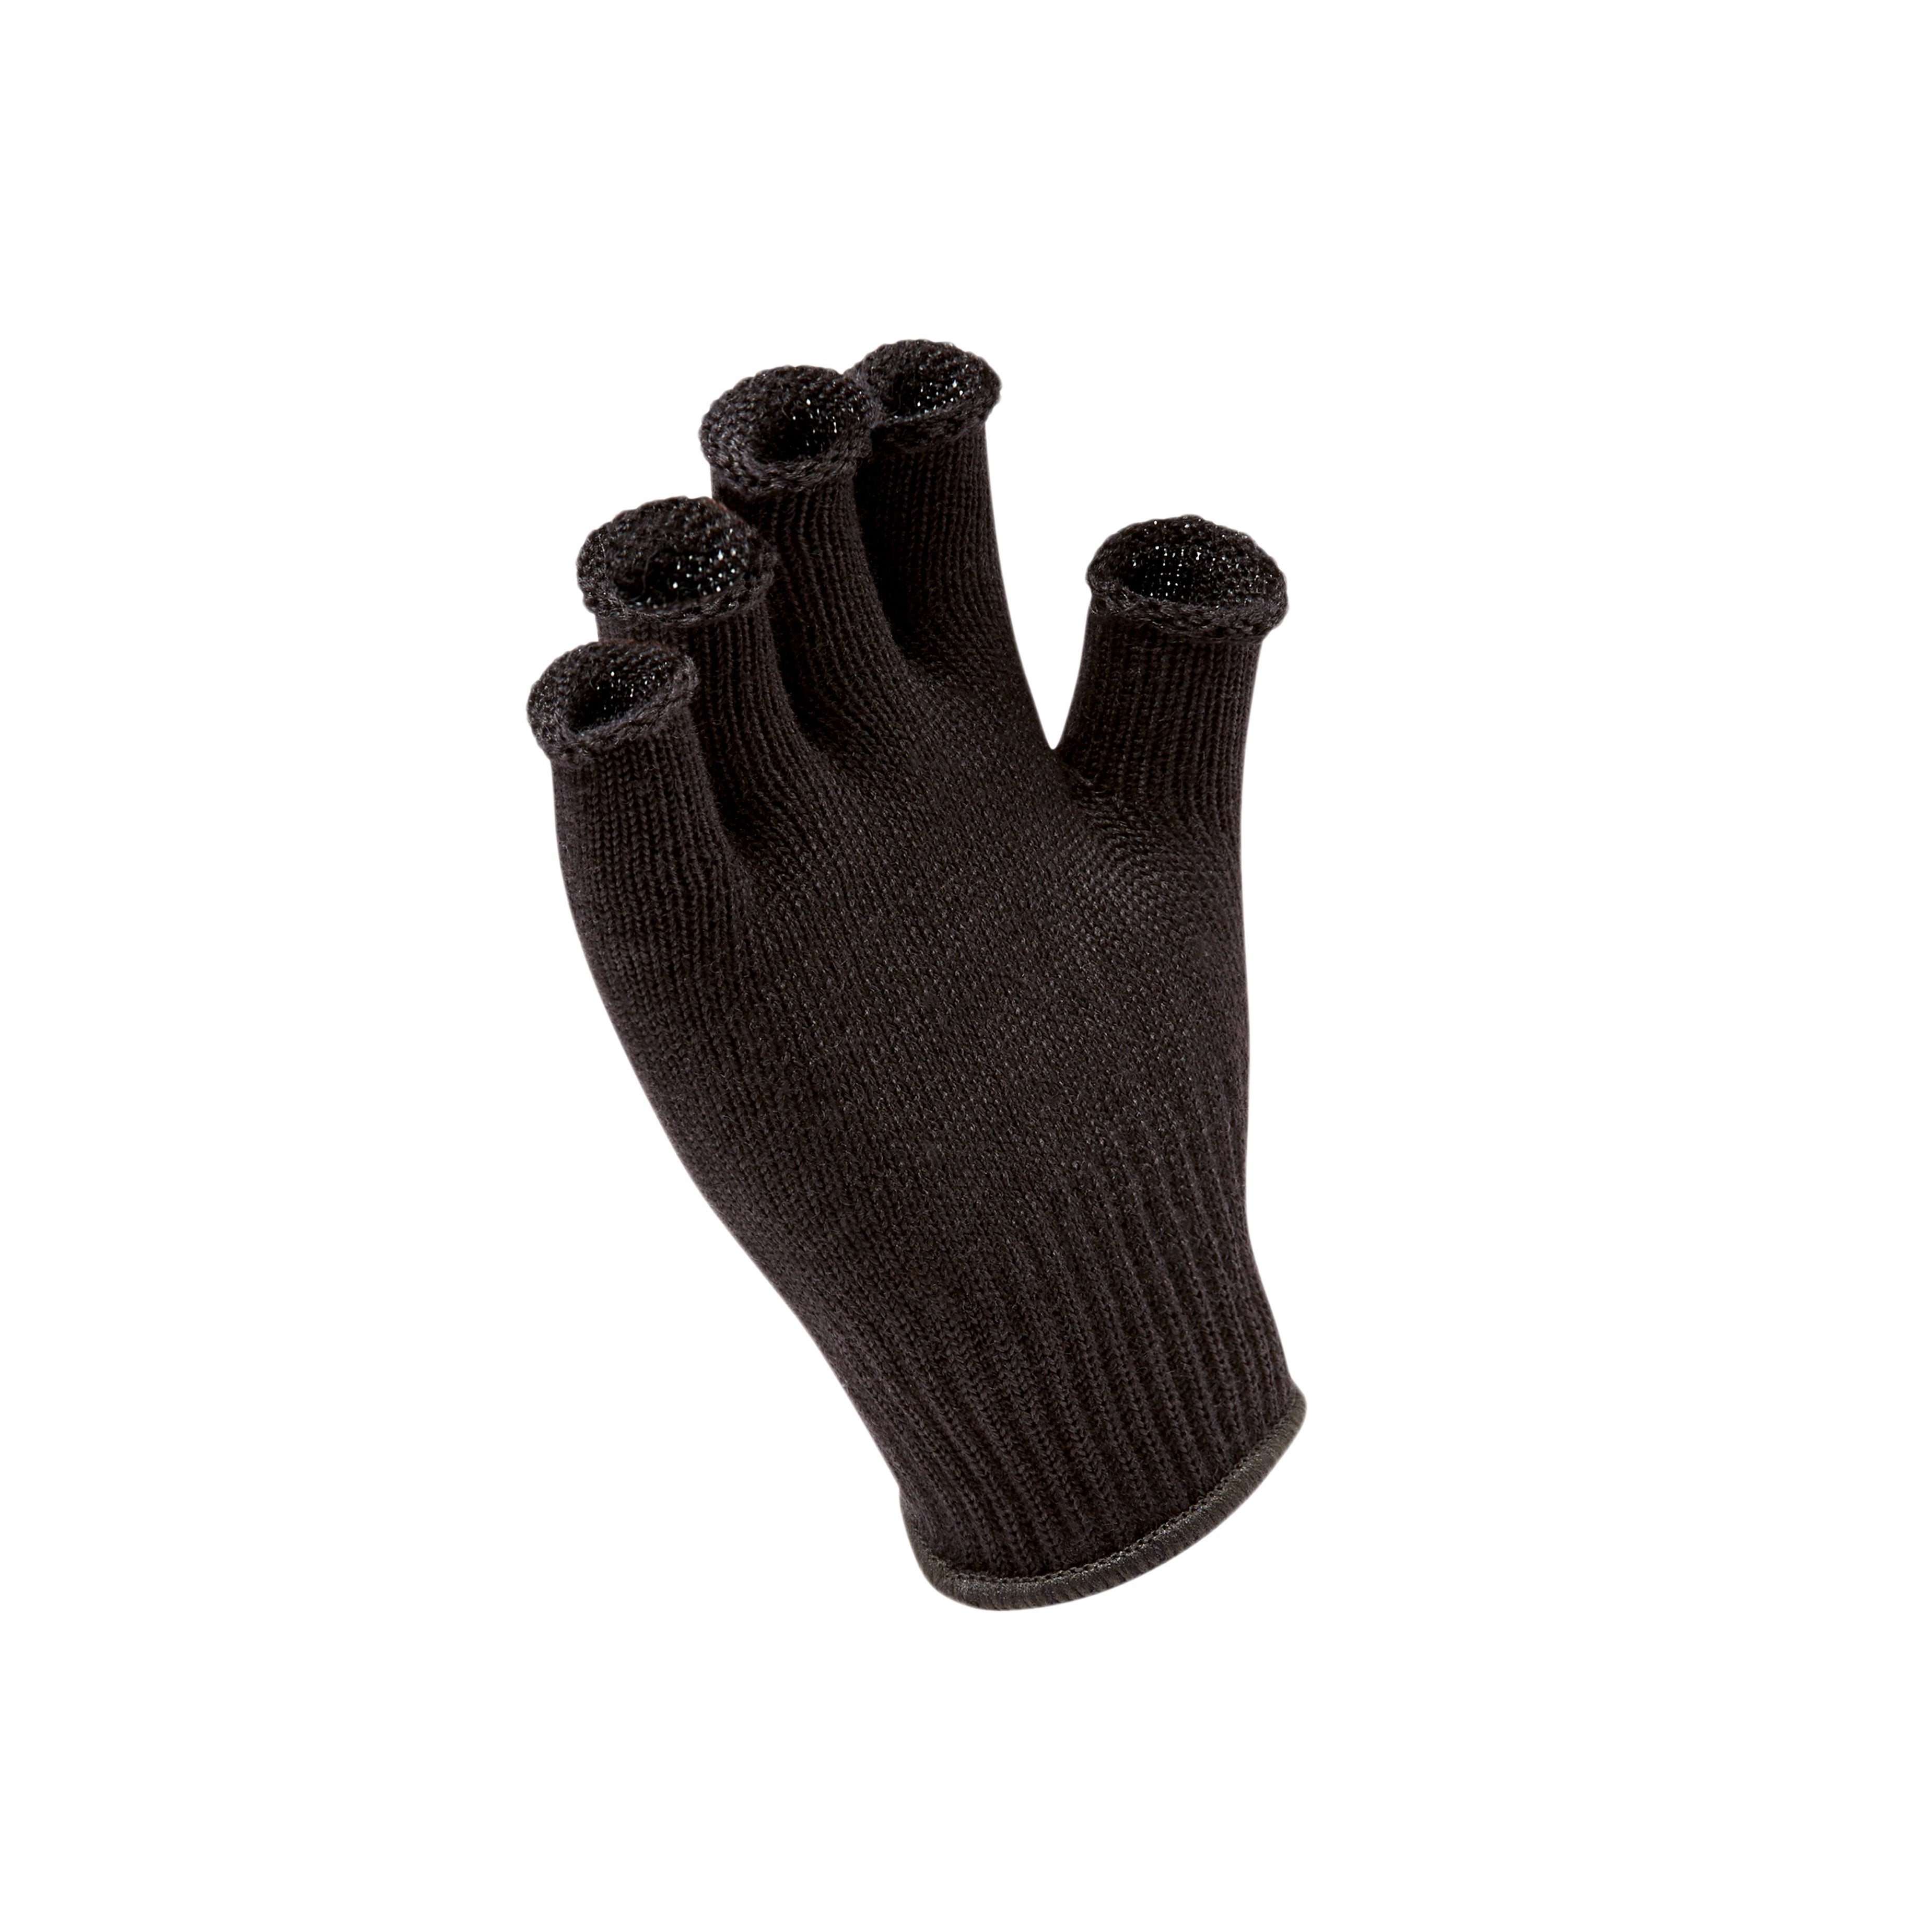 Sealskinz Welney Solo Merino Liner Fingerless Glove, Black, One Size